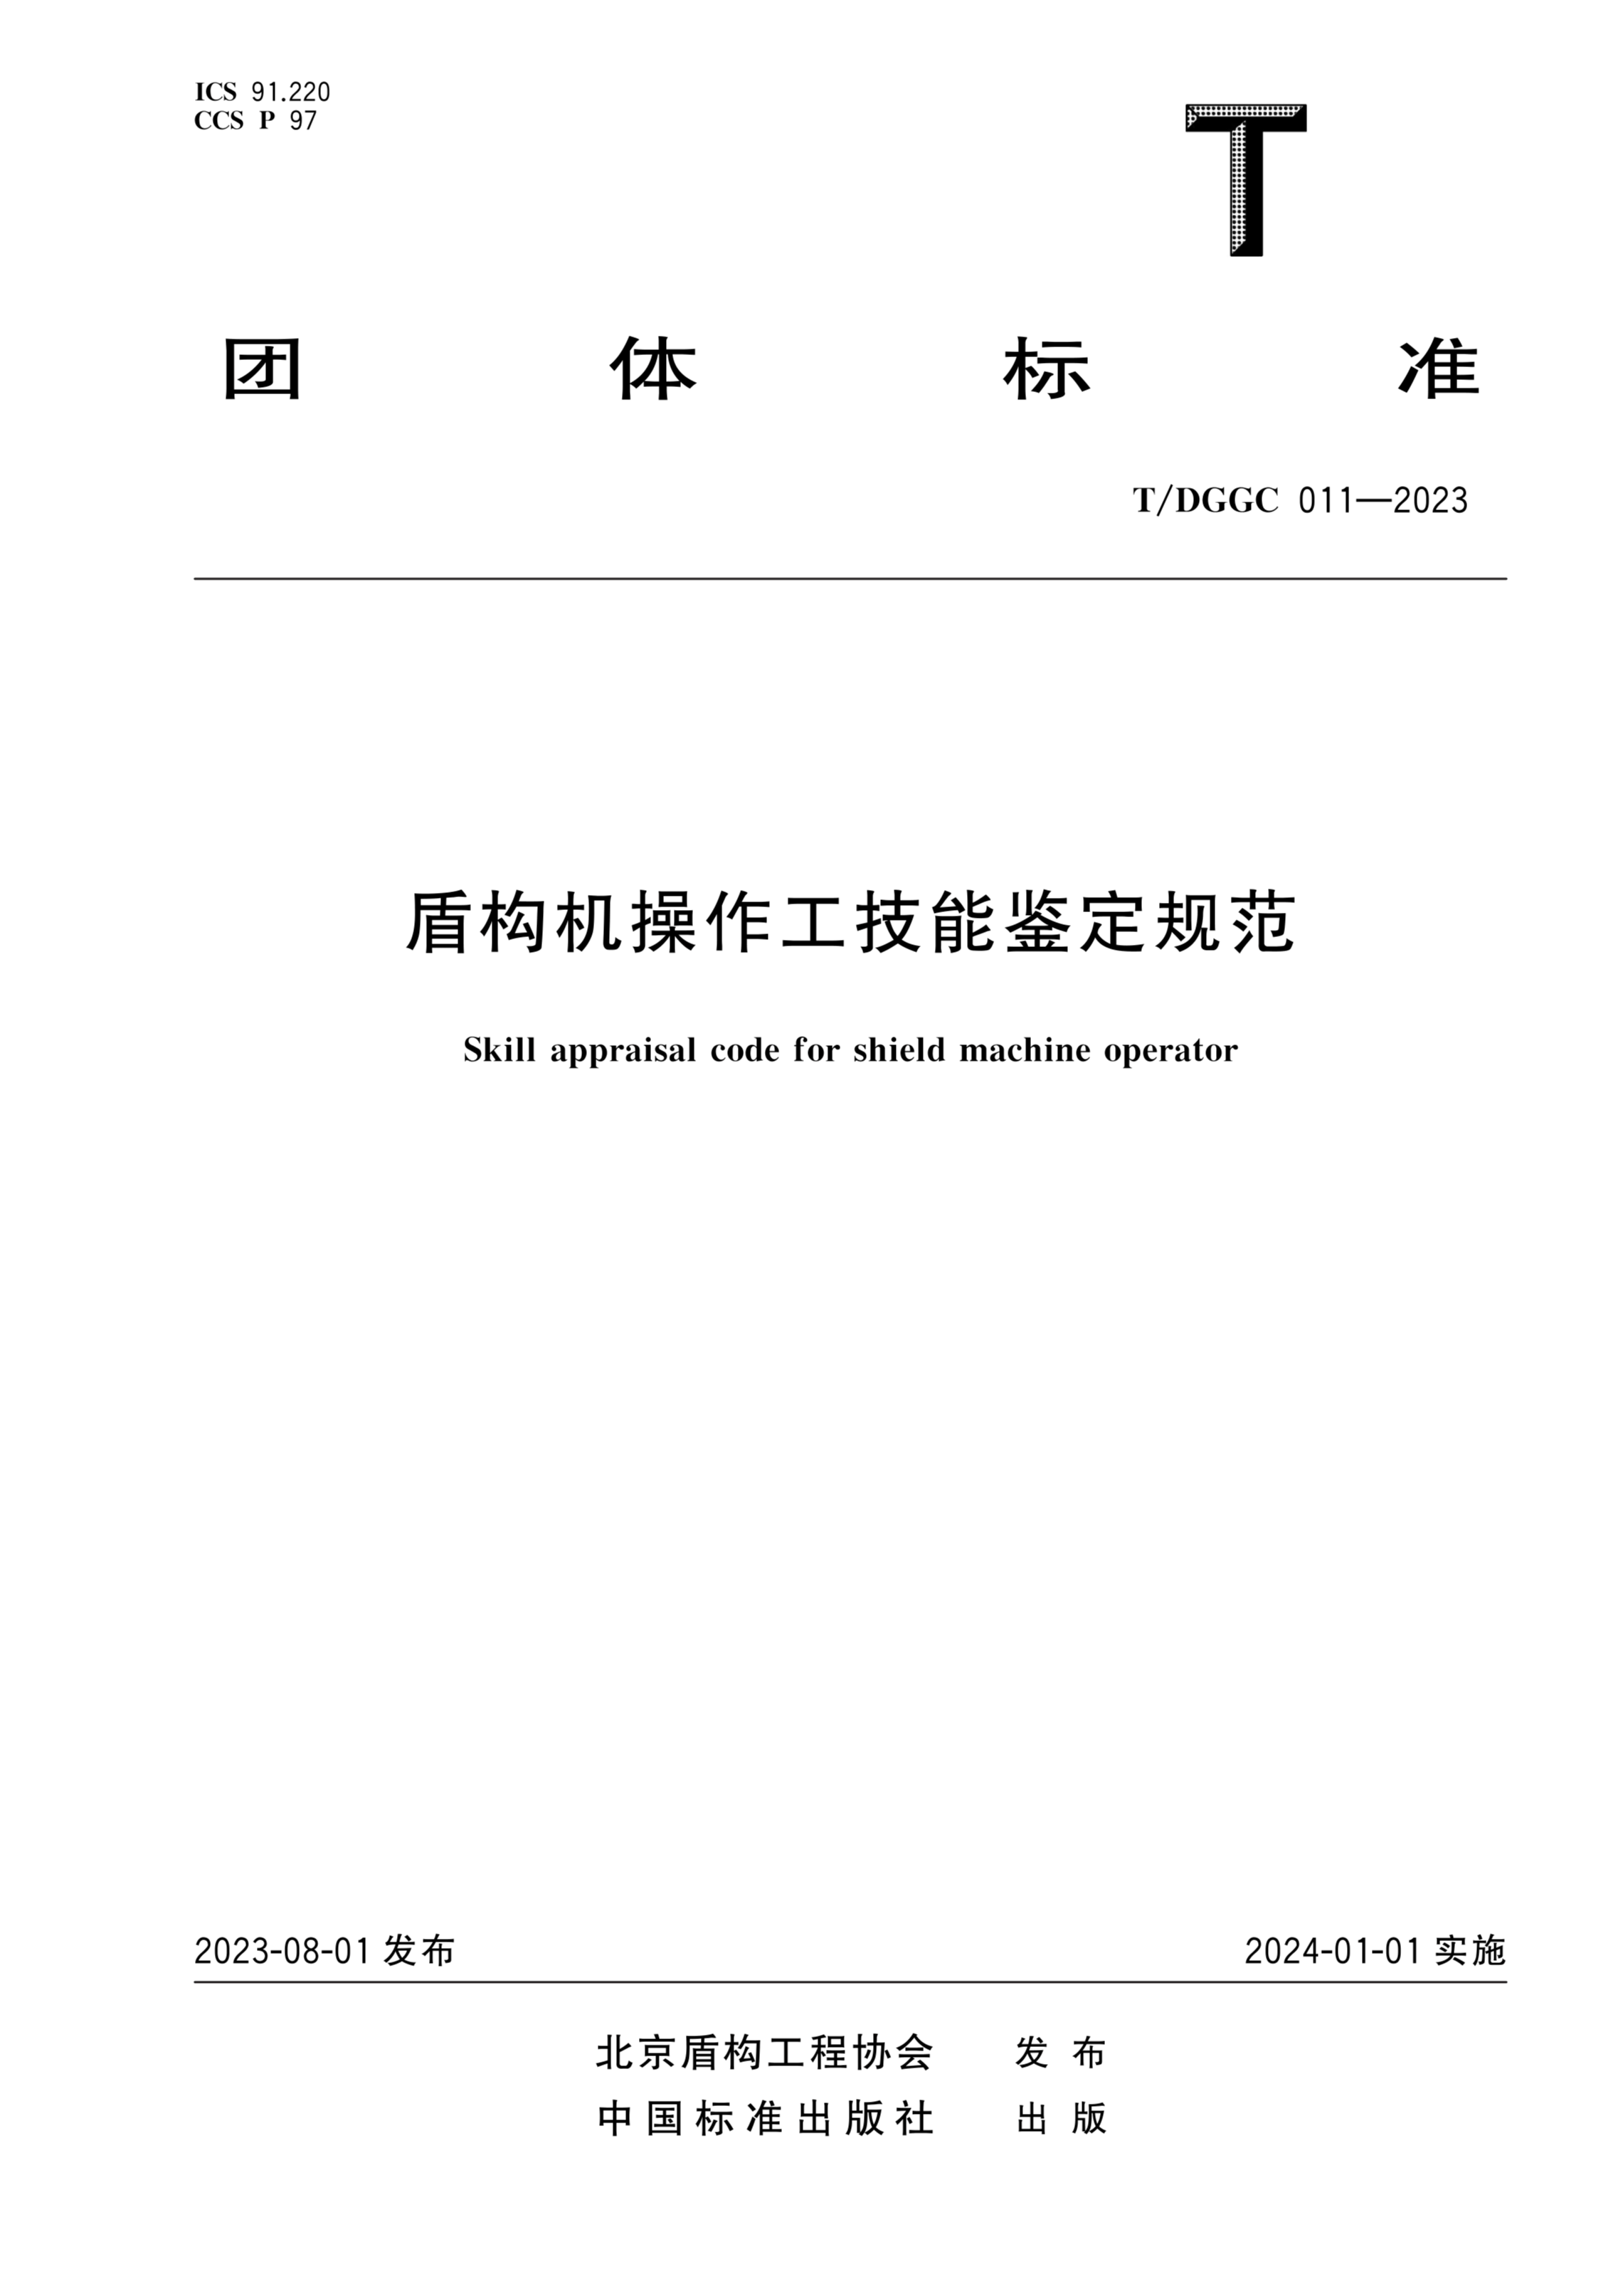 T/DGGC 011-2023 盾构机操作工技能鉴定规范